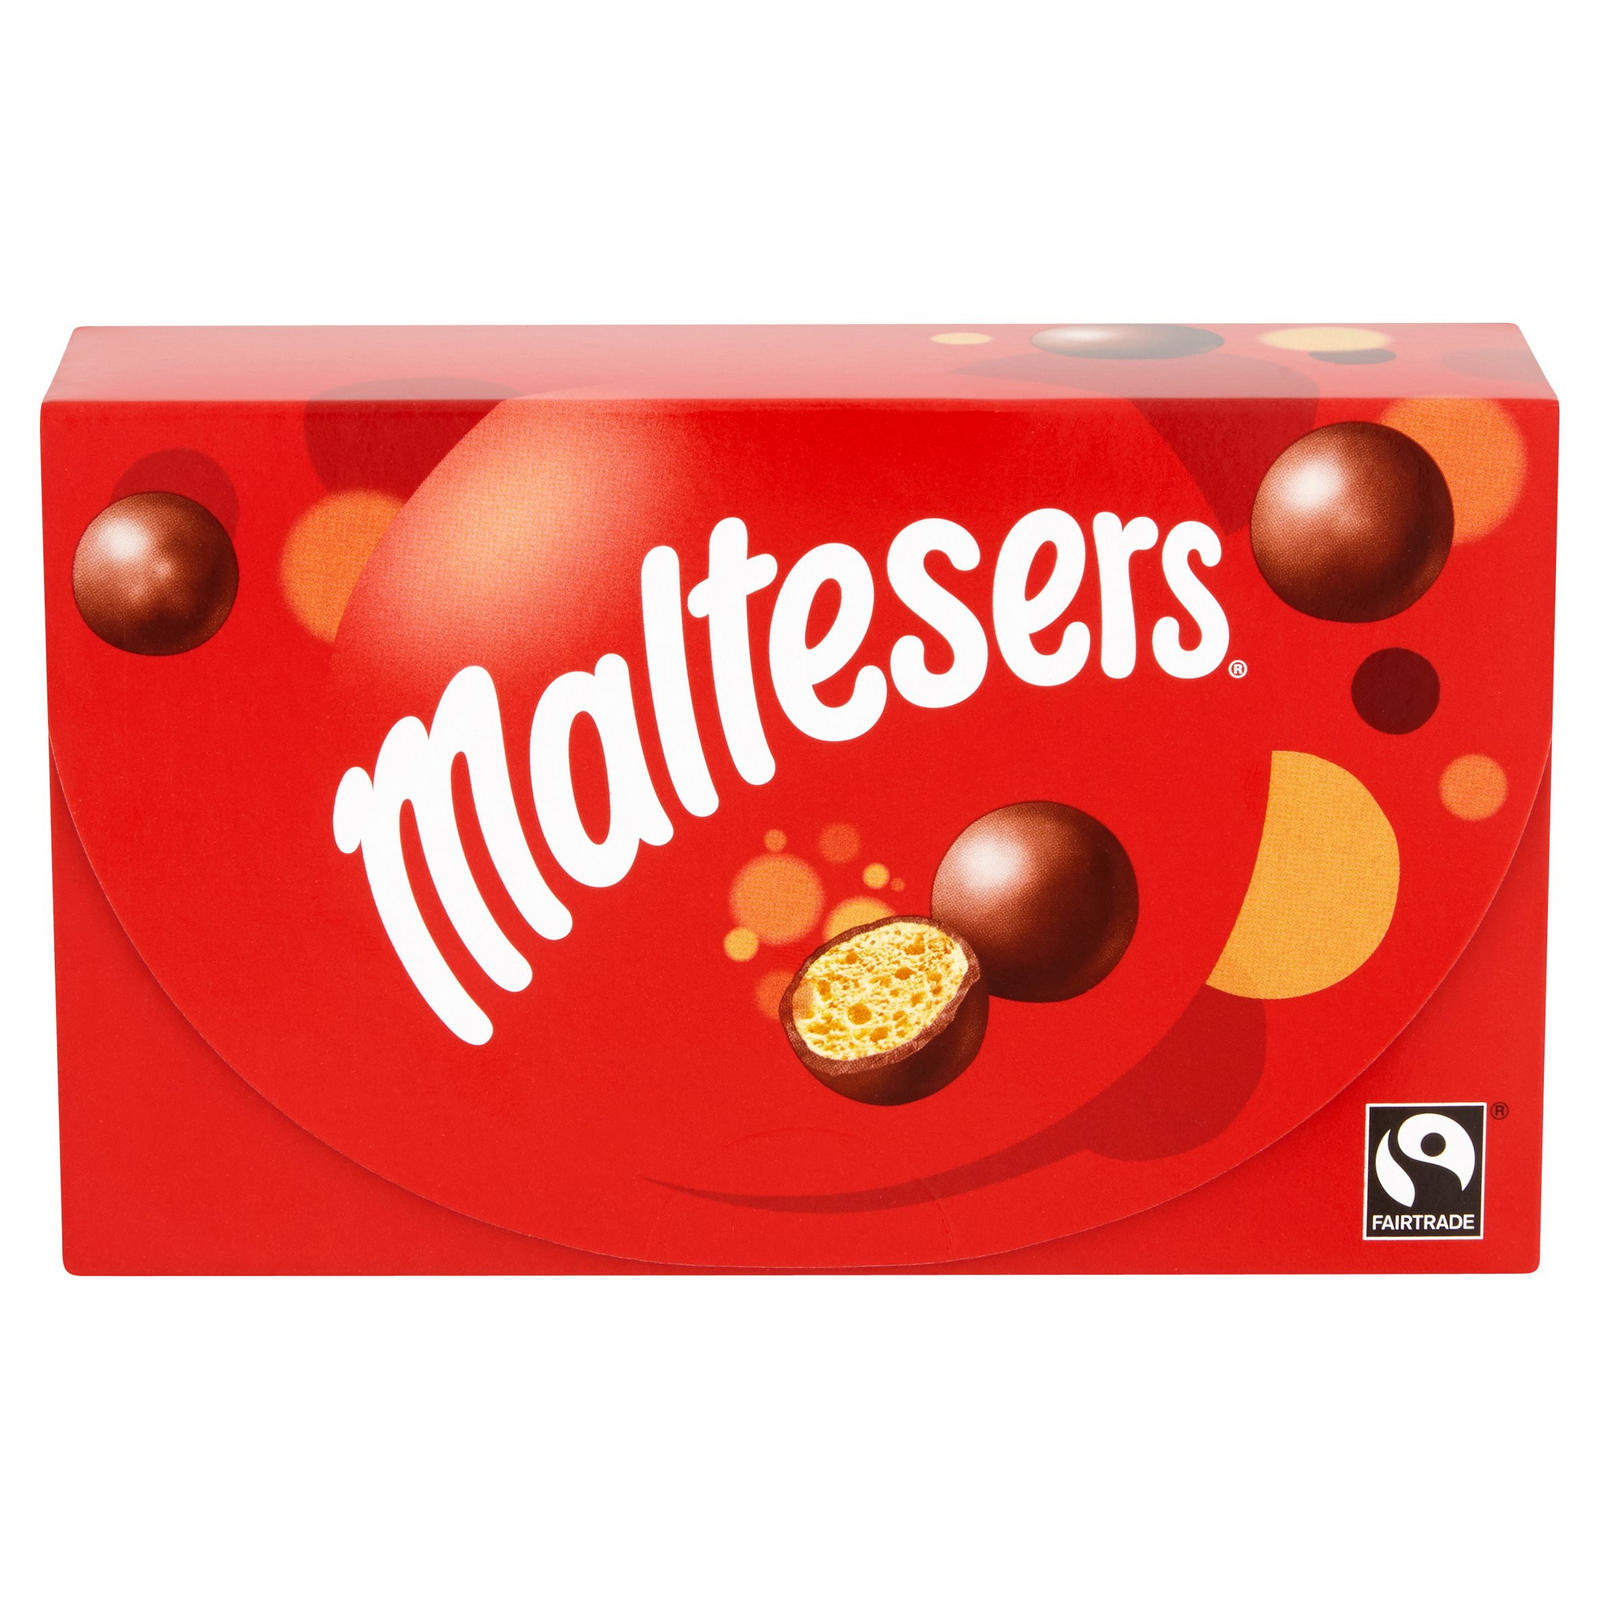 Maltesers Fairtrade Chocolate Box 100g Chocolate Boxes